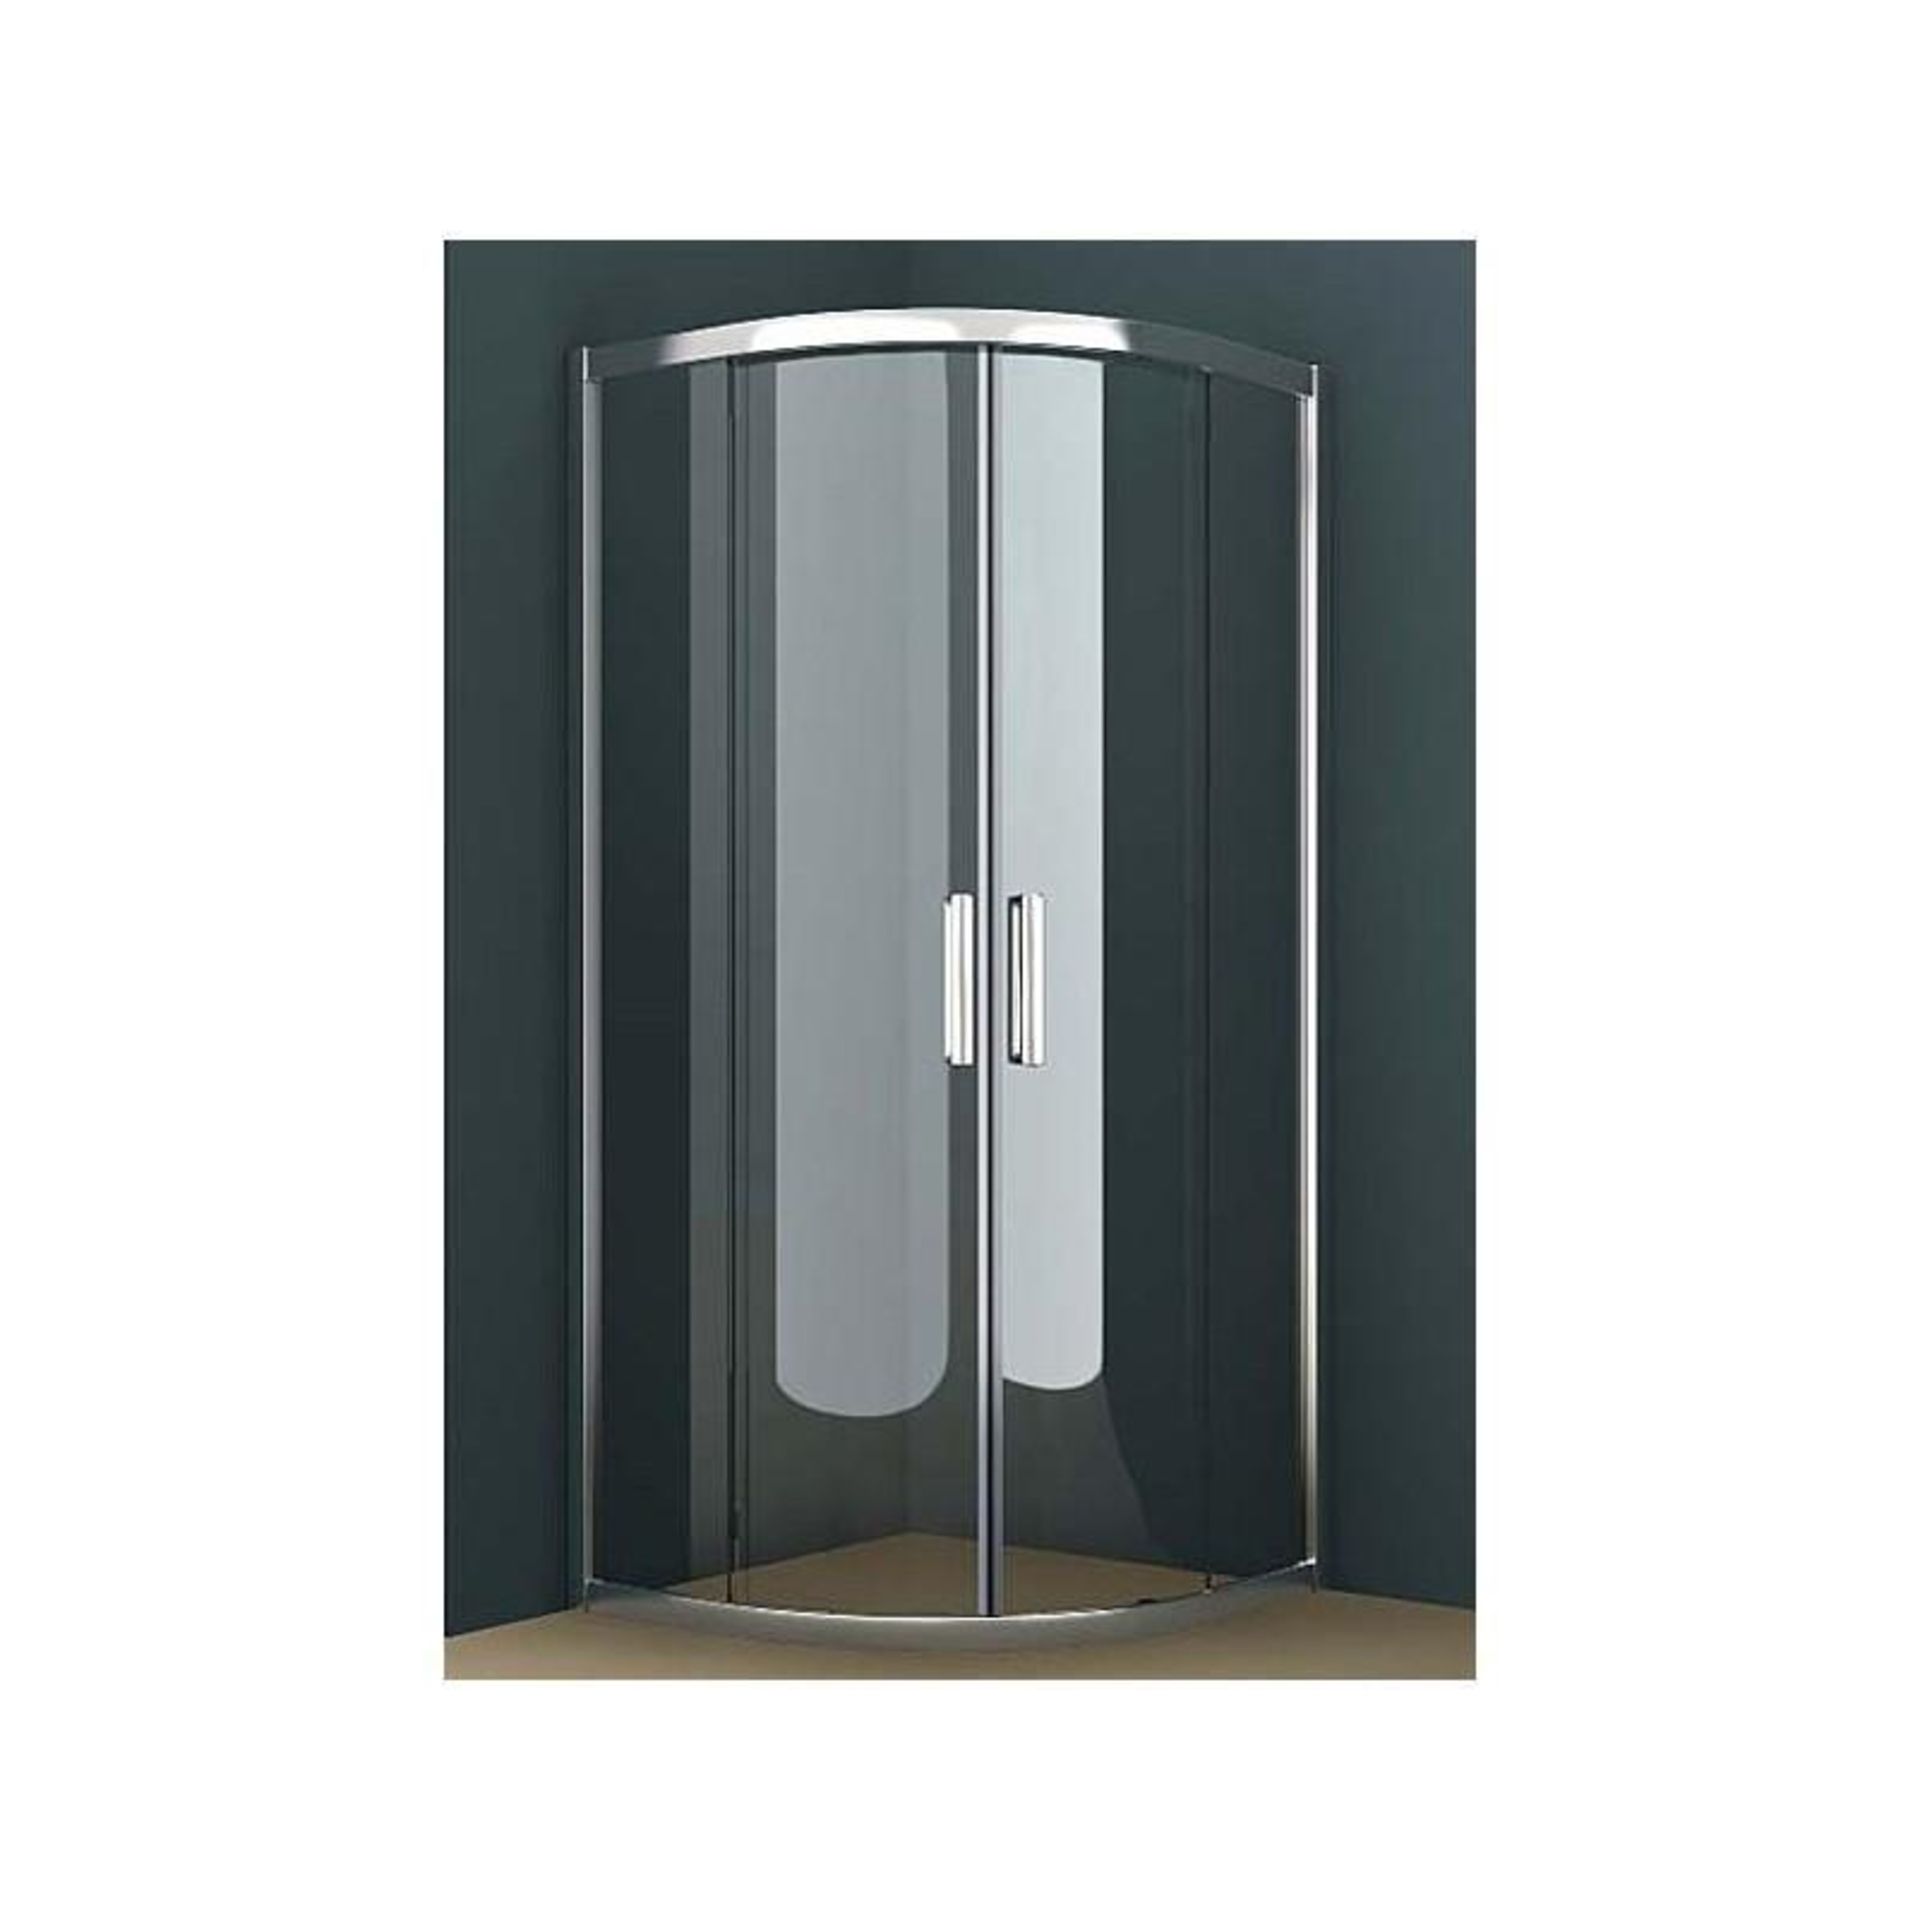 1 x Tavistock Oxygen 8 Double Sliding Door Quadrant Shower Enclosure - 900x900x1950mm - New Boxed St